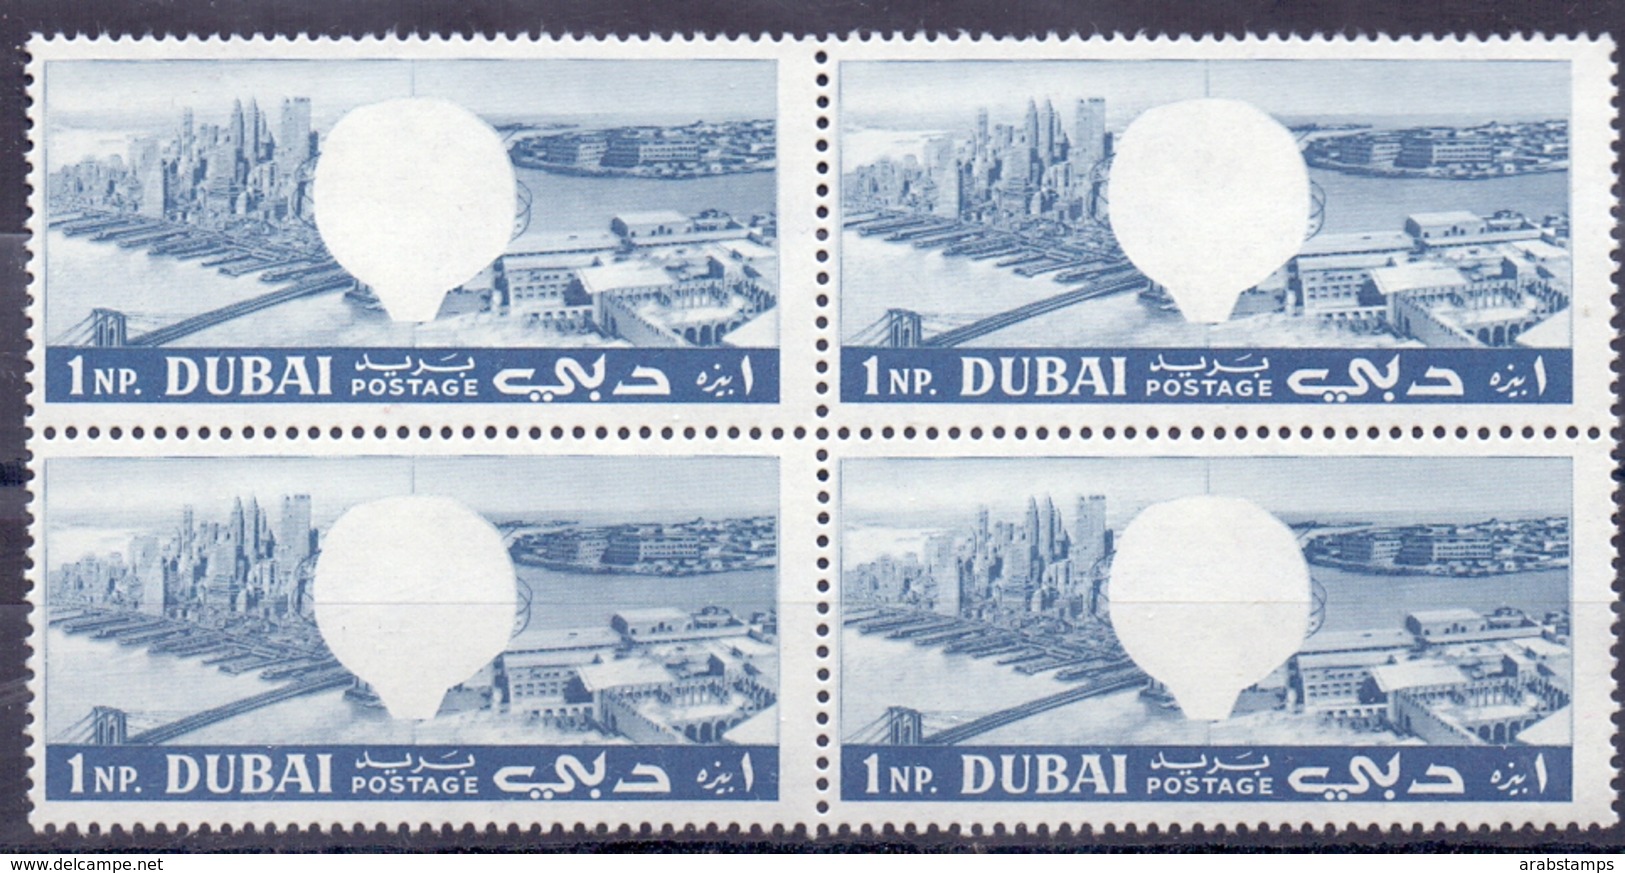 1964 DUBAI New York World's Fair Error Without Image Printing In The Center Block Of 4 MNH - Dubai